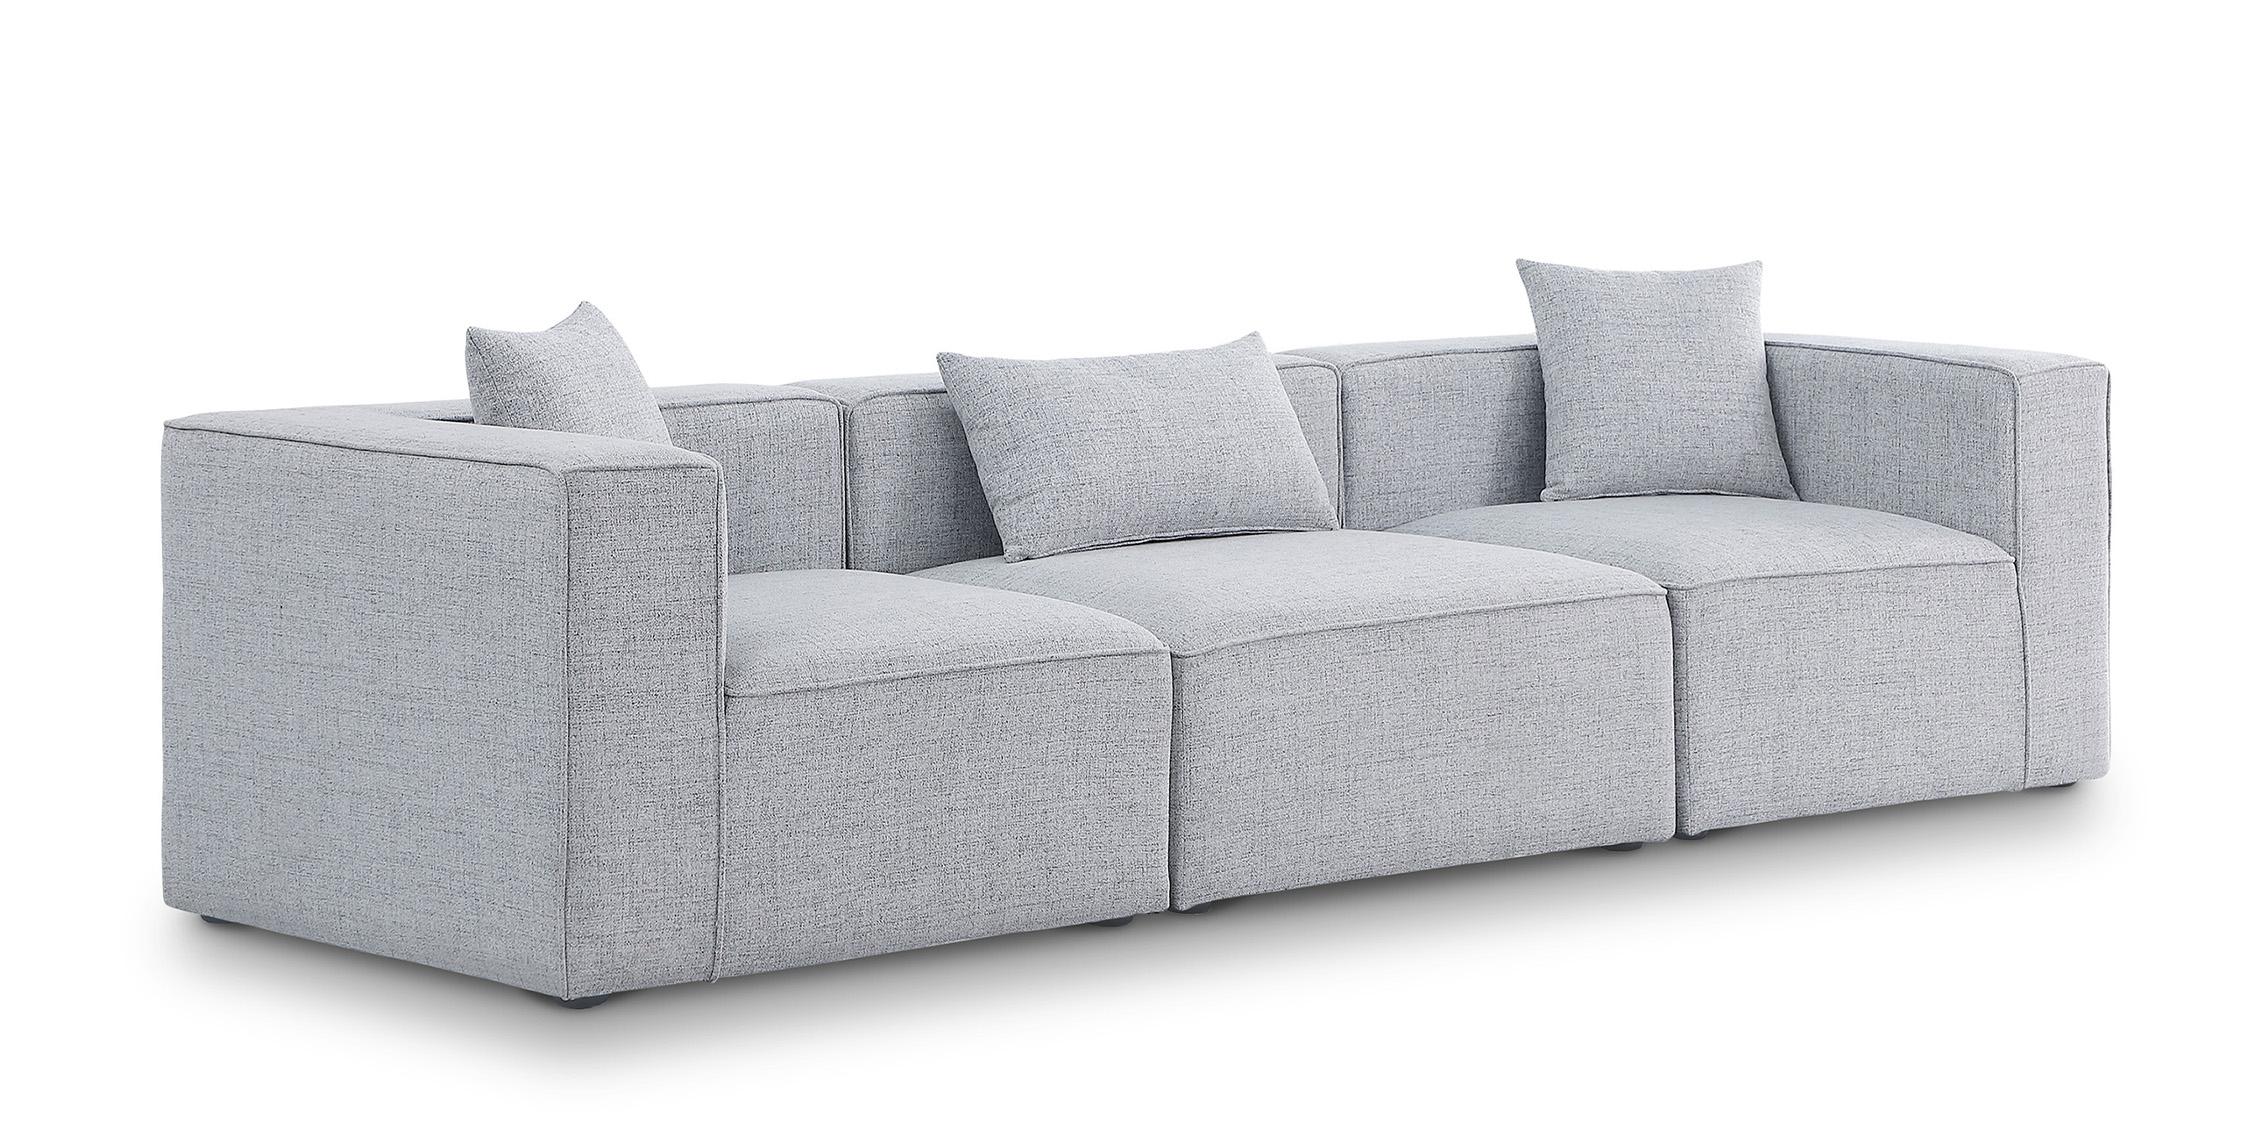 Contemporary, Modern Modular Sofa CUBE 630Grey-S108B 630Grey-S108B in Gray Linen